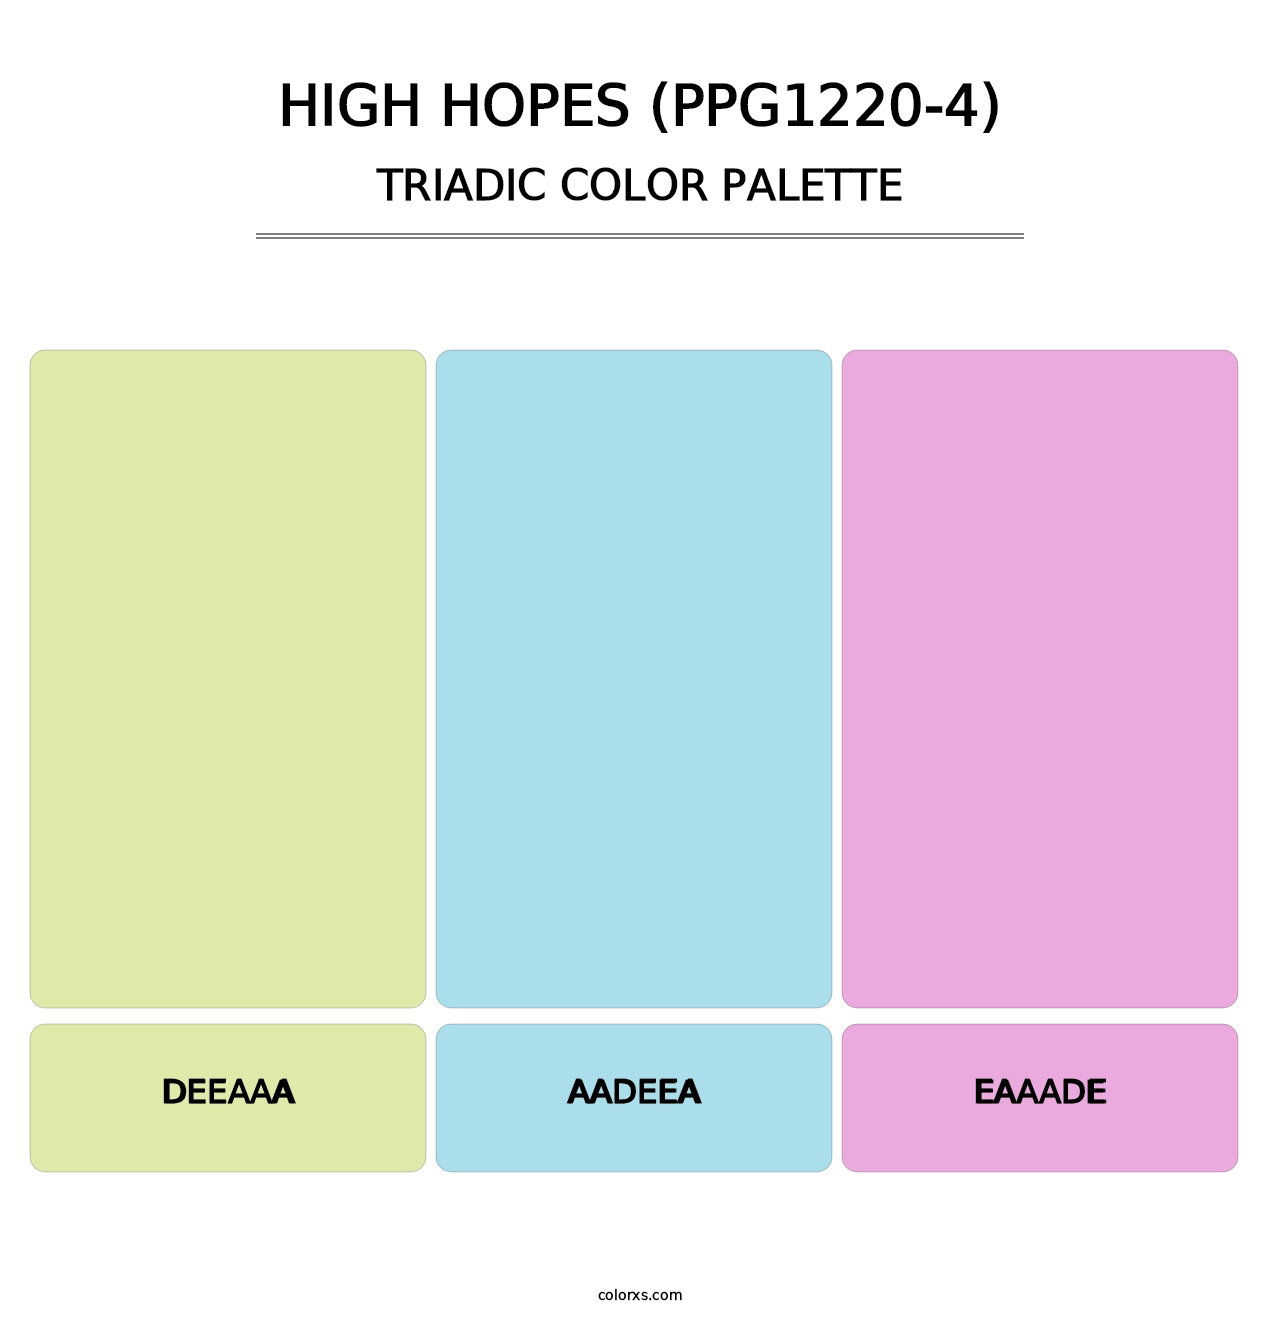 High Hopes (PPG1220-4) - Triadic Color Palette